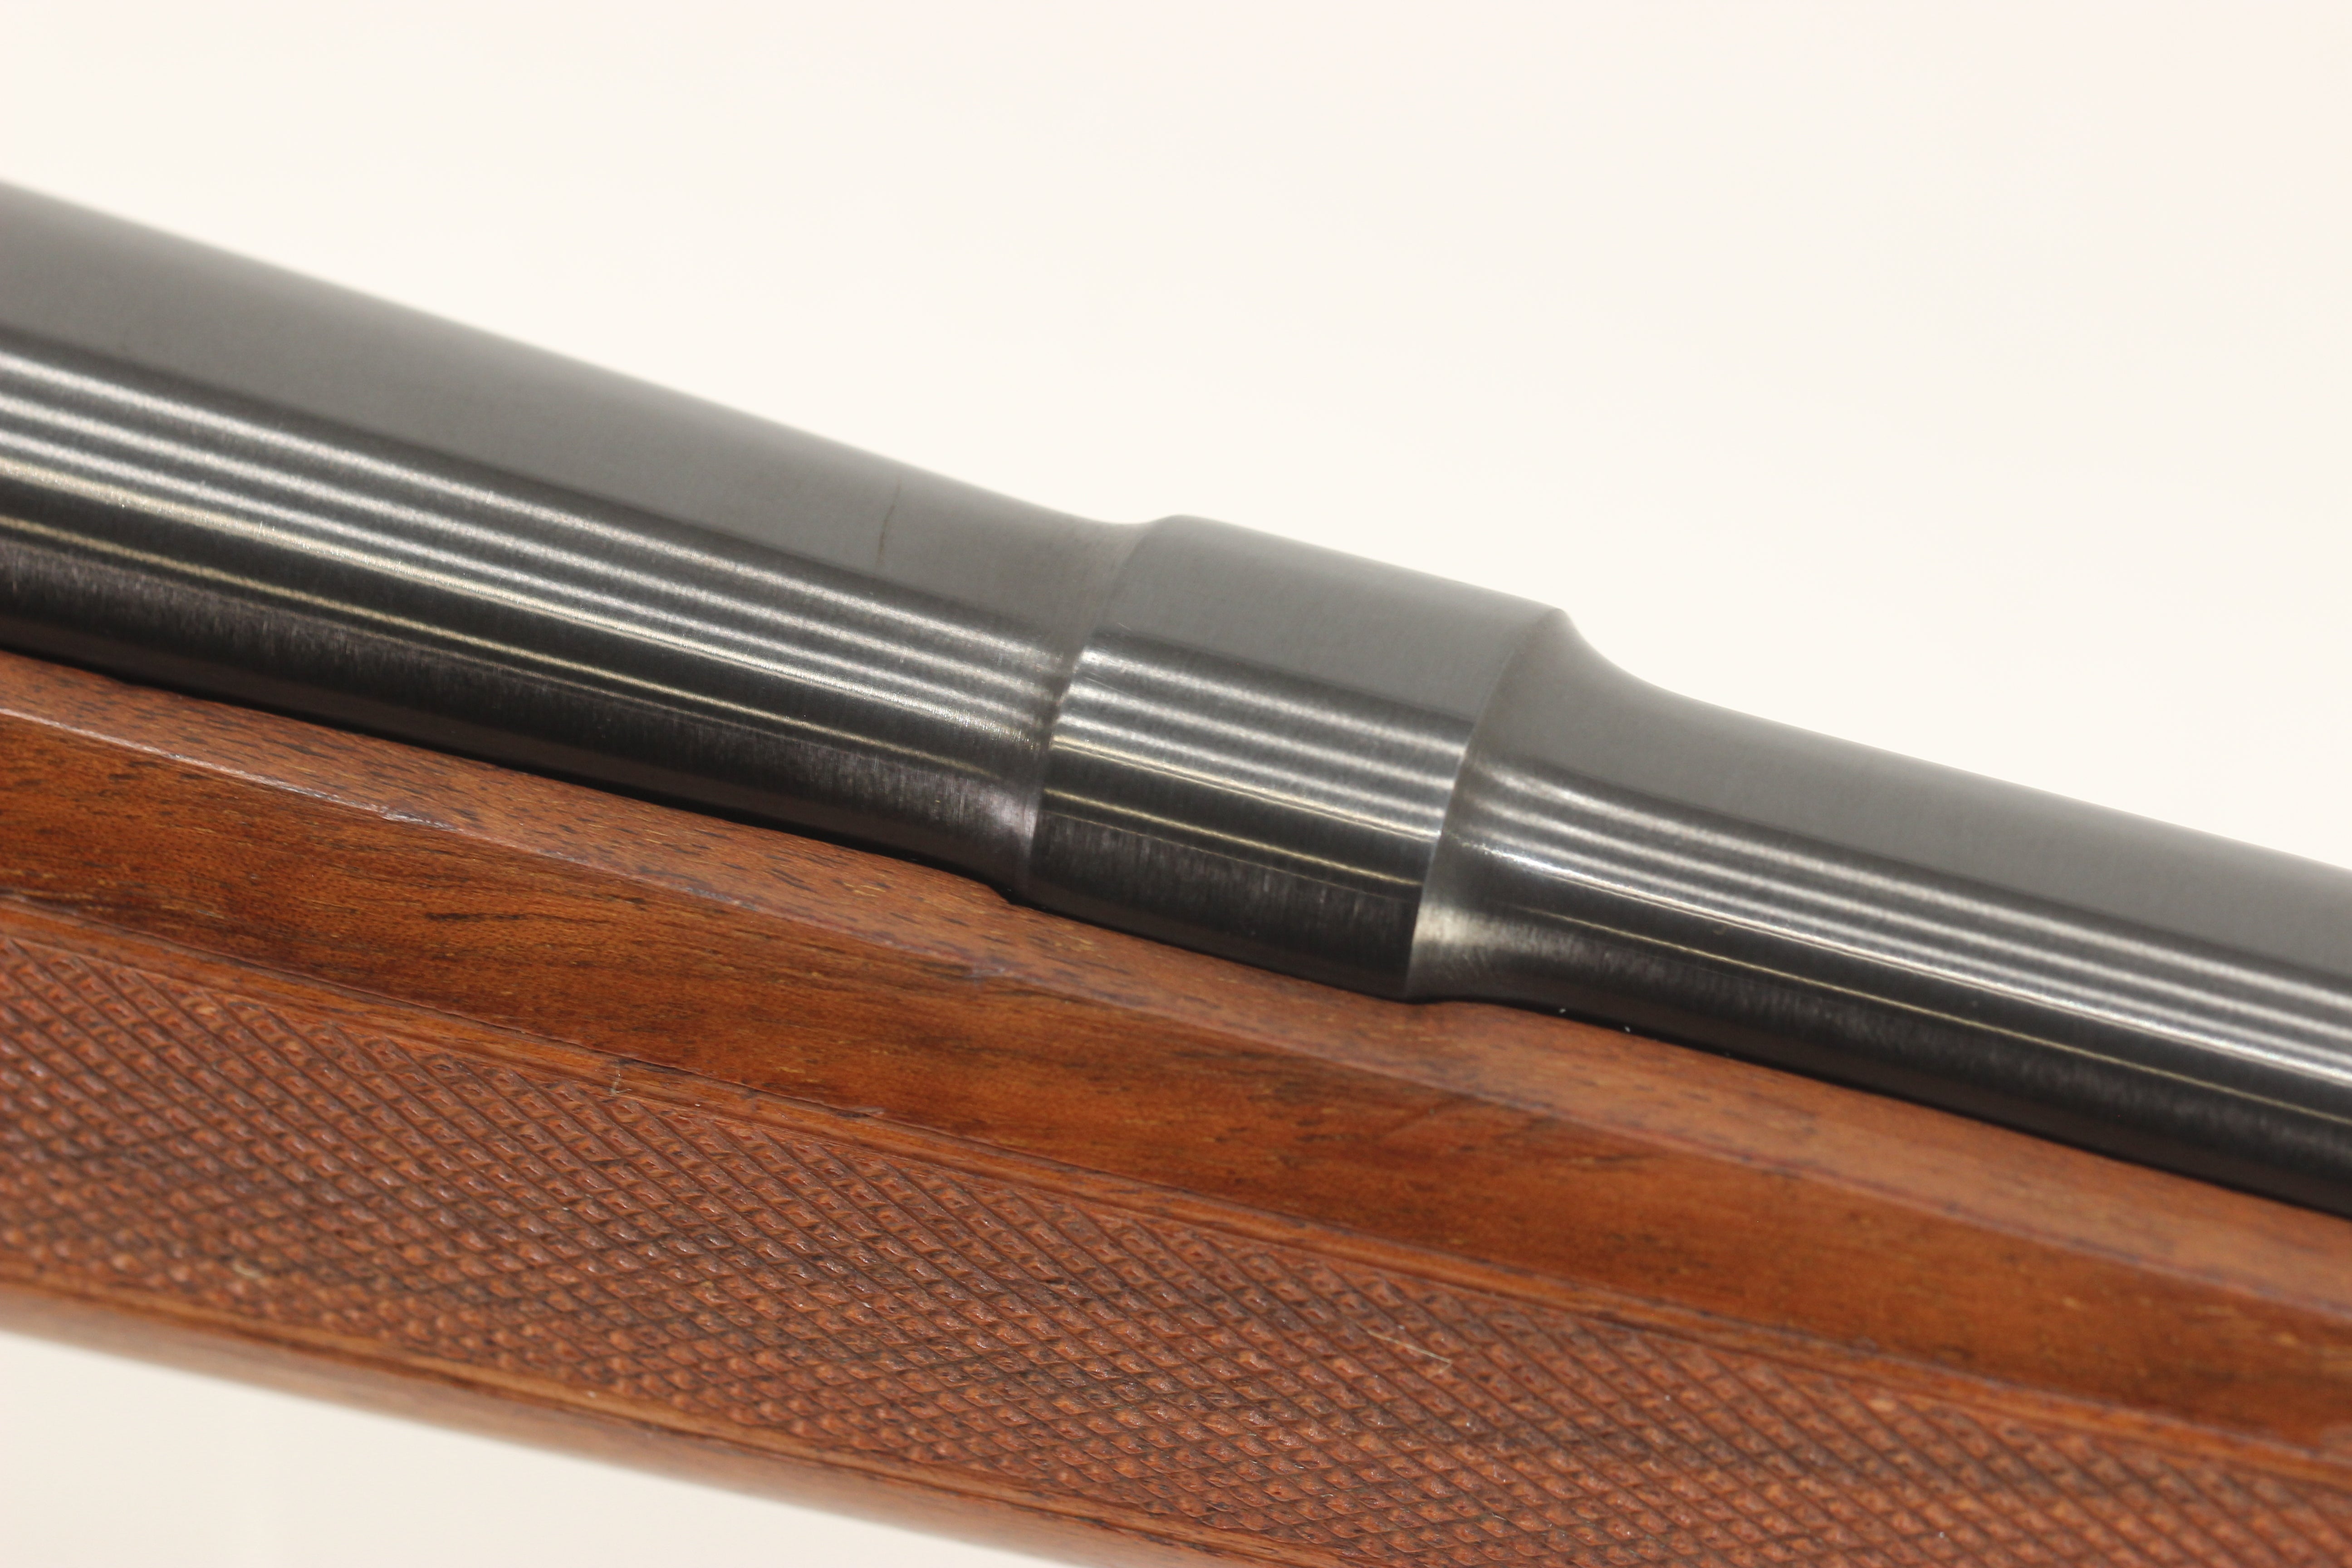 .338 Win Magnum Sightless Rifle - 1961